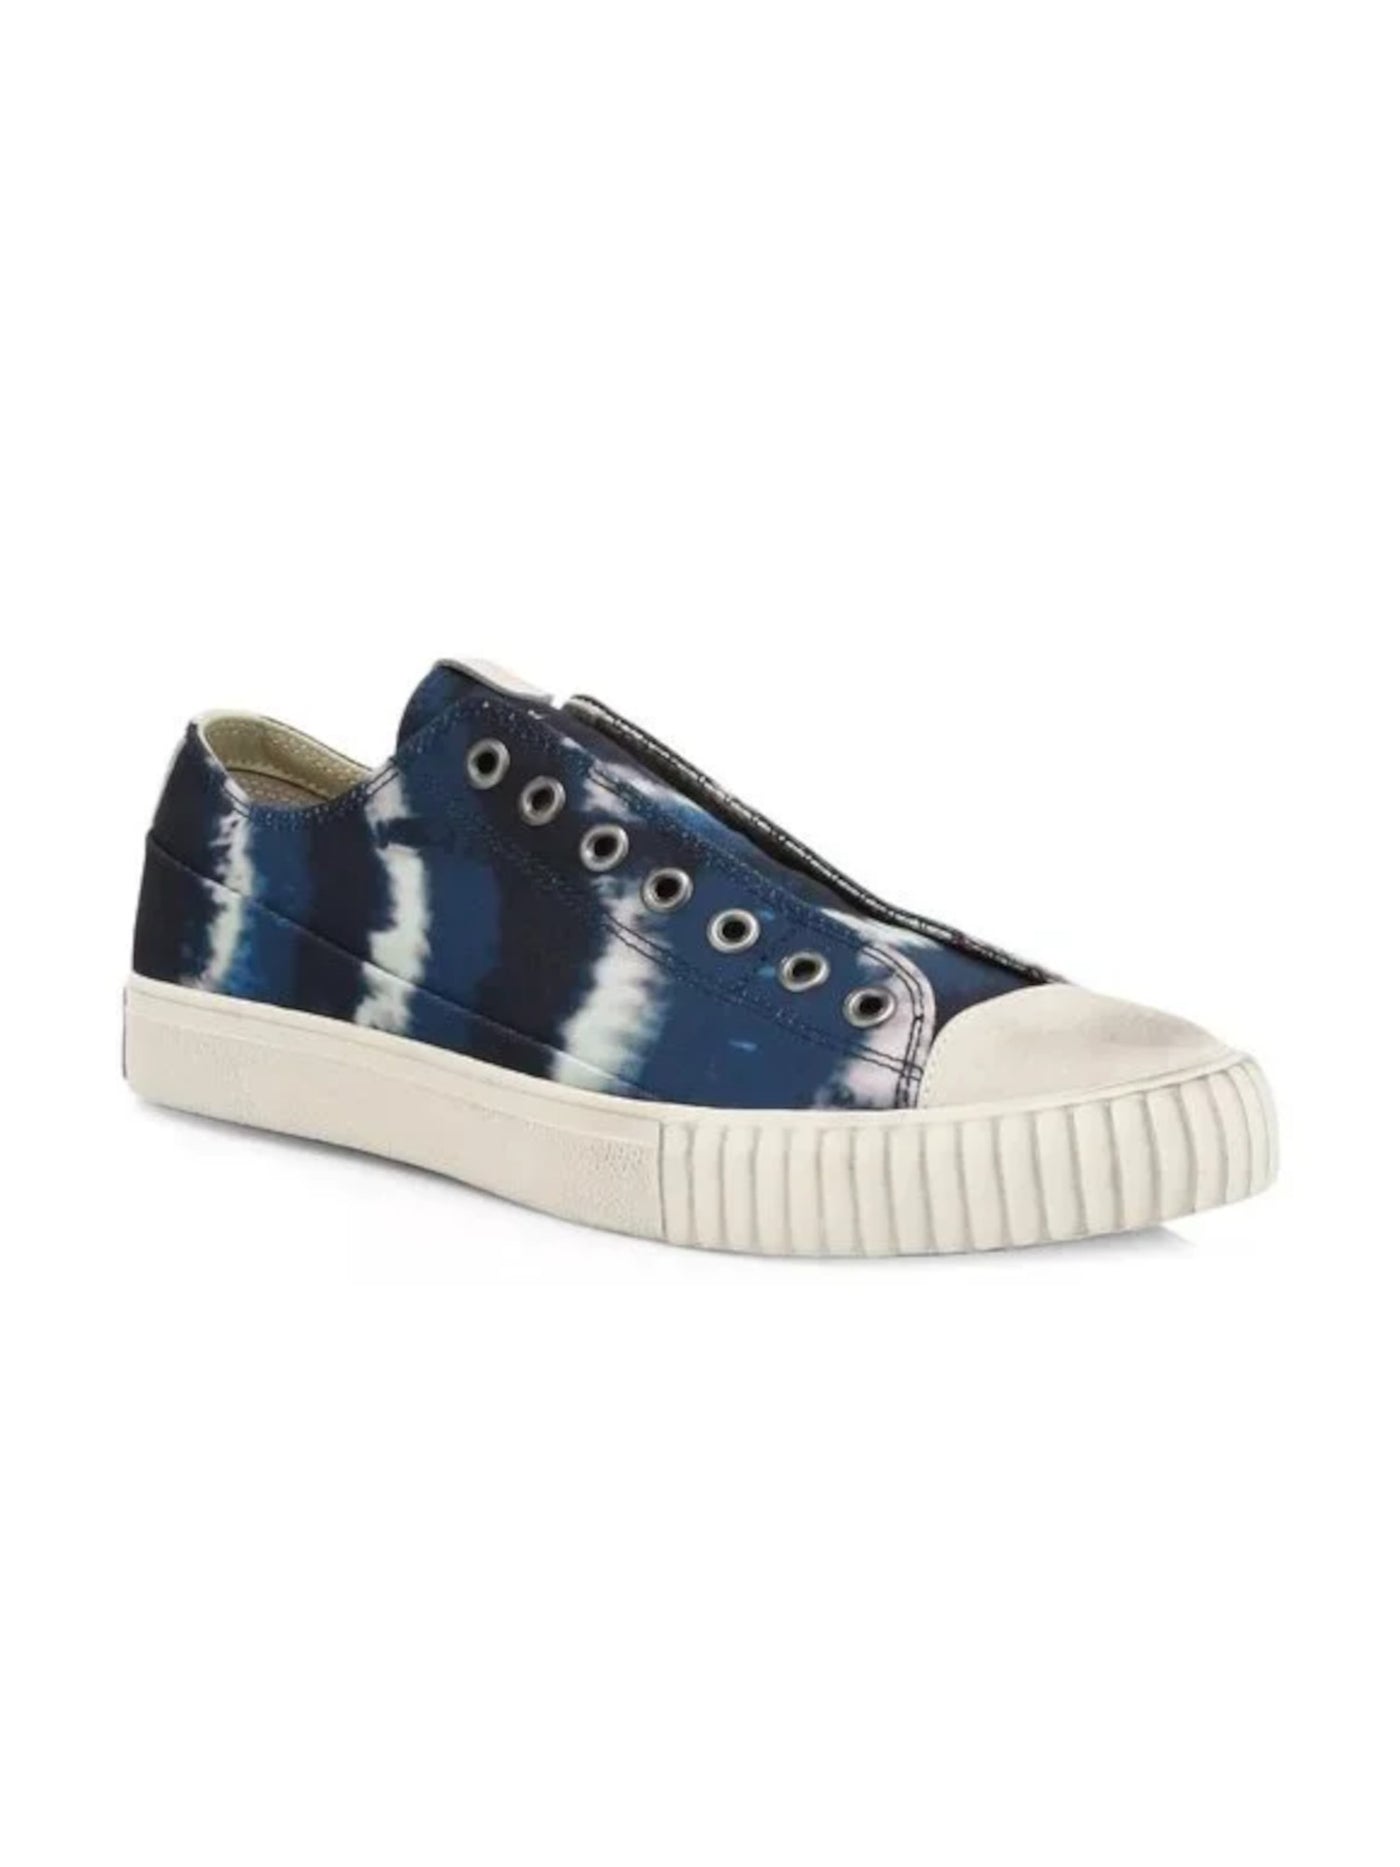 JOHN VARVATOS Mens Blue Tie Dye Round Toe Platform Slip On Athletic Sneakers Shoes 13 M